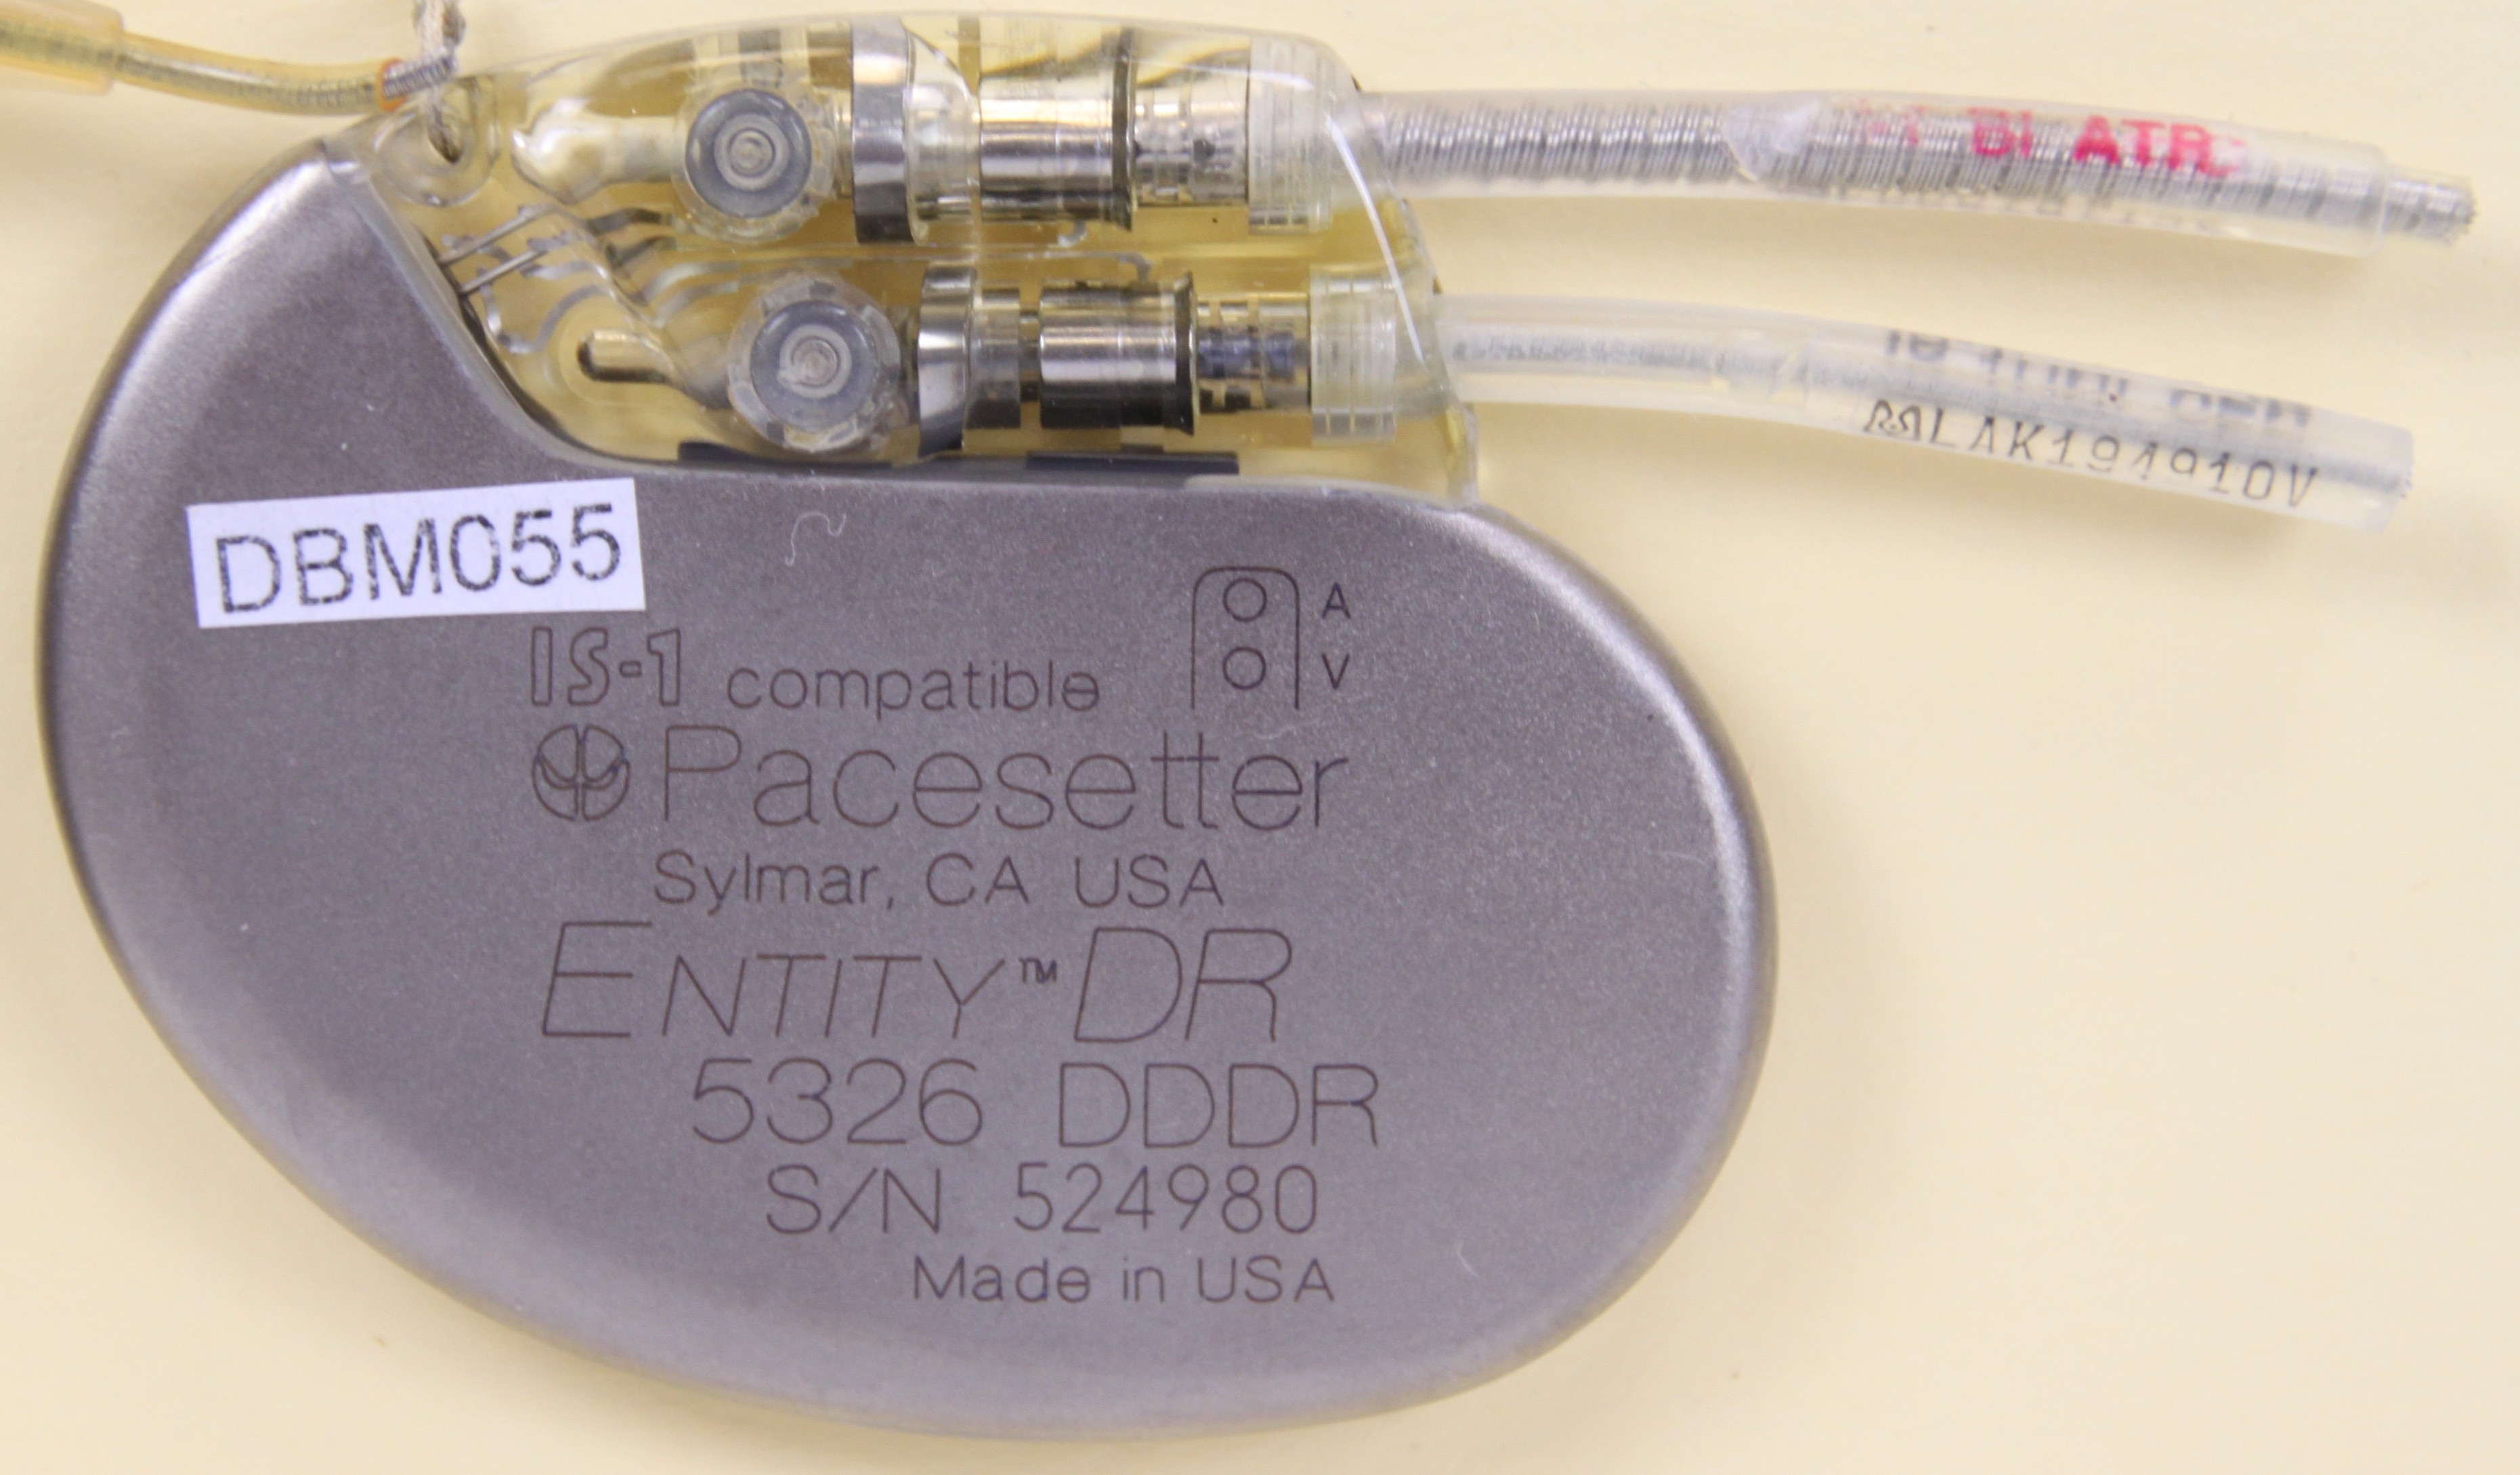 Herzschrittmacher-Implantat Pacesetter ENTITY DR 5326 (Krankenhausmuseum Bielefeld e.V. CC BY-NC-SA)